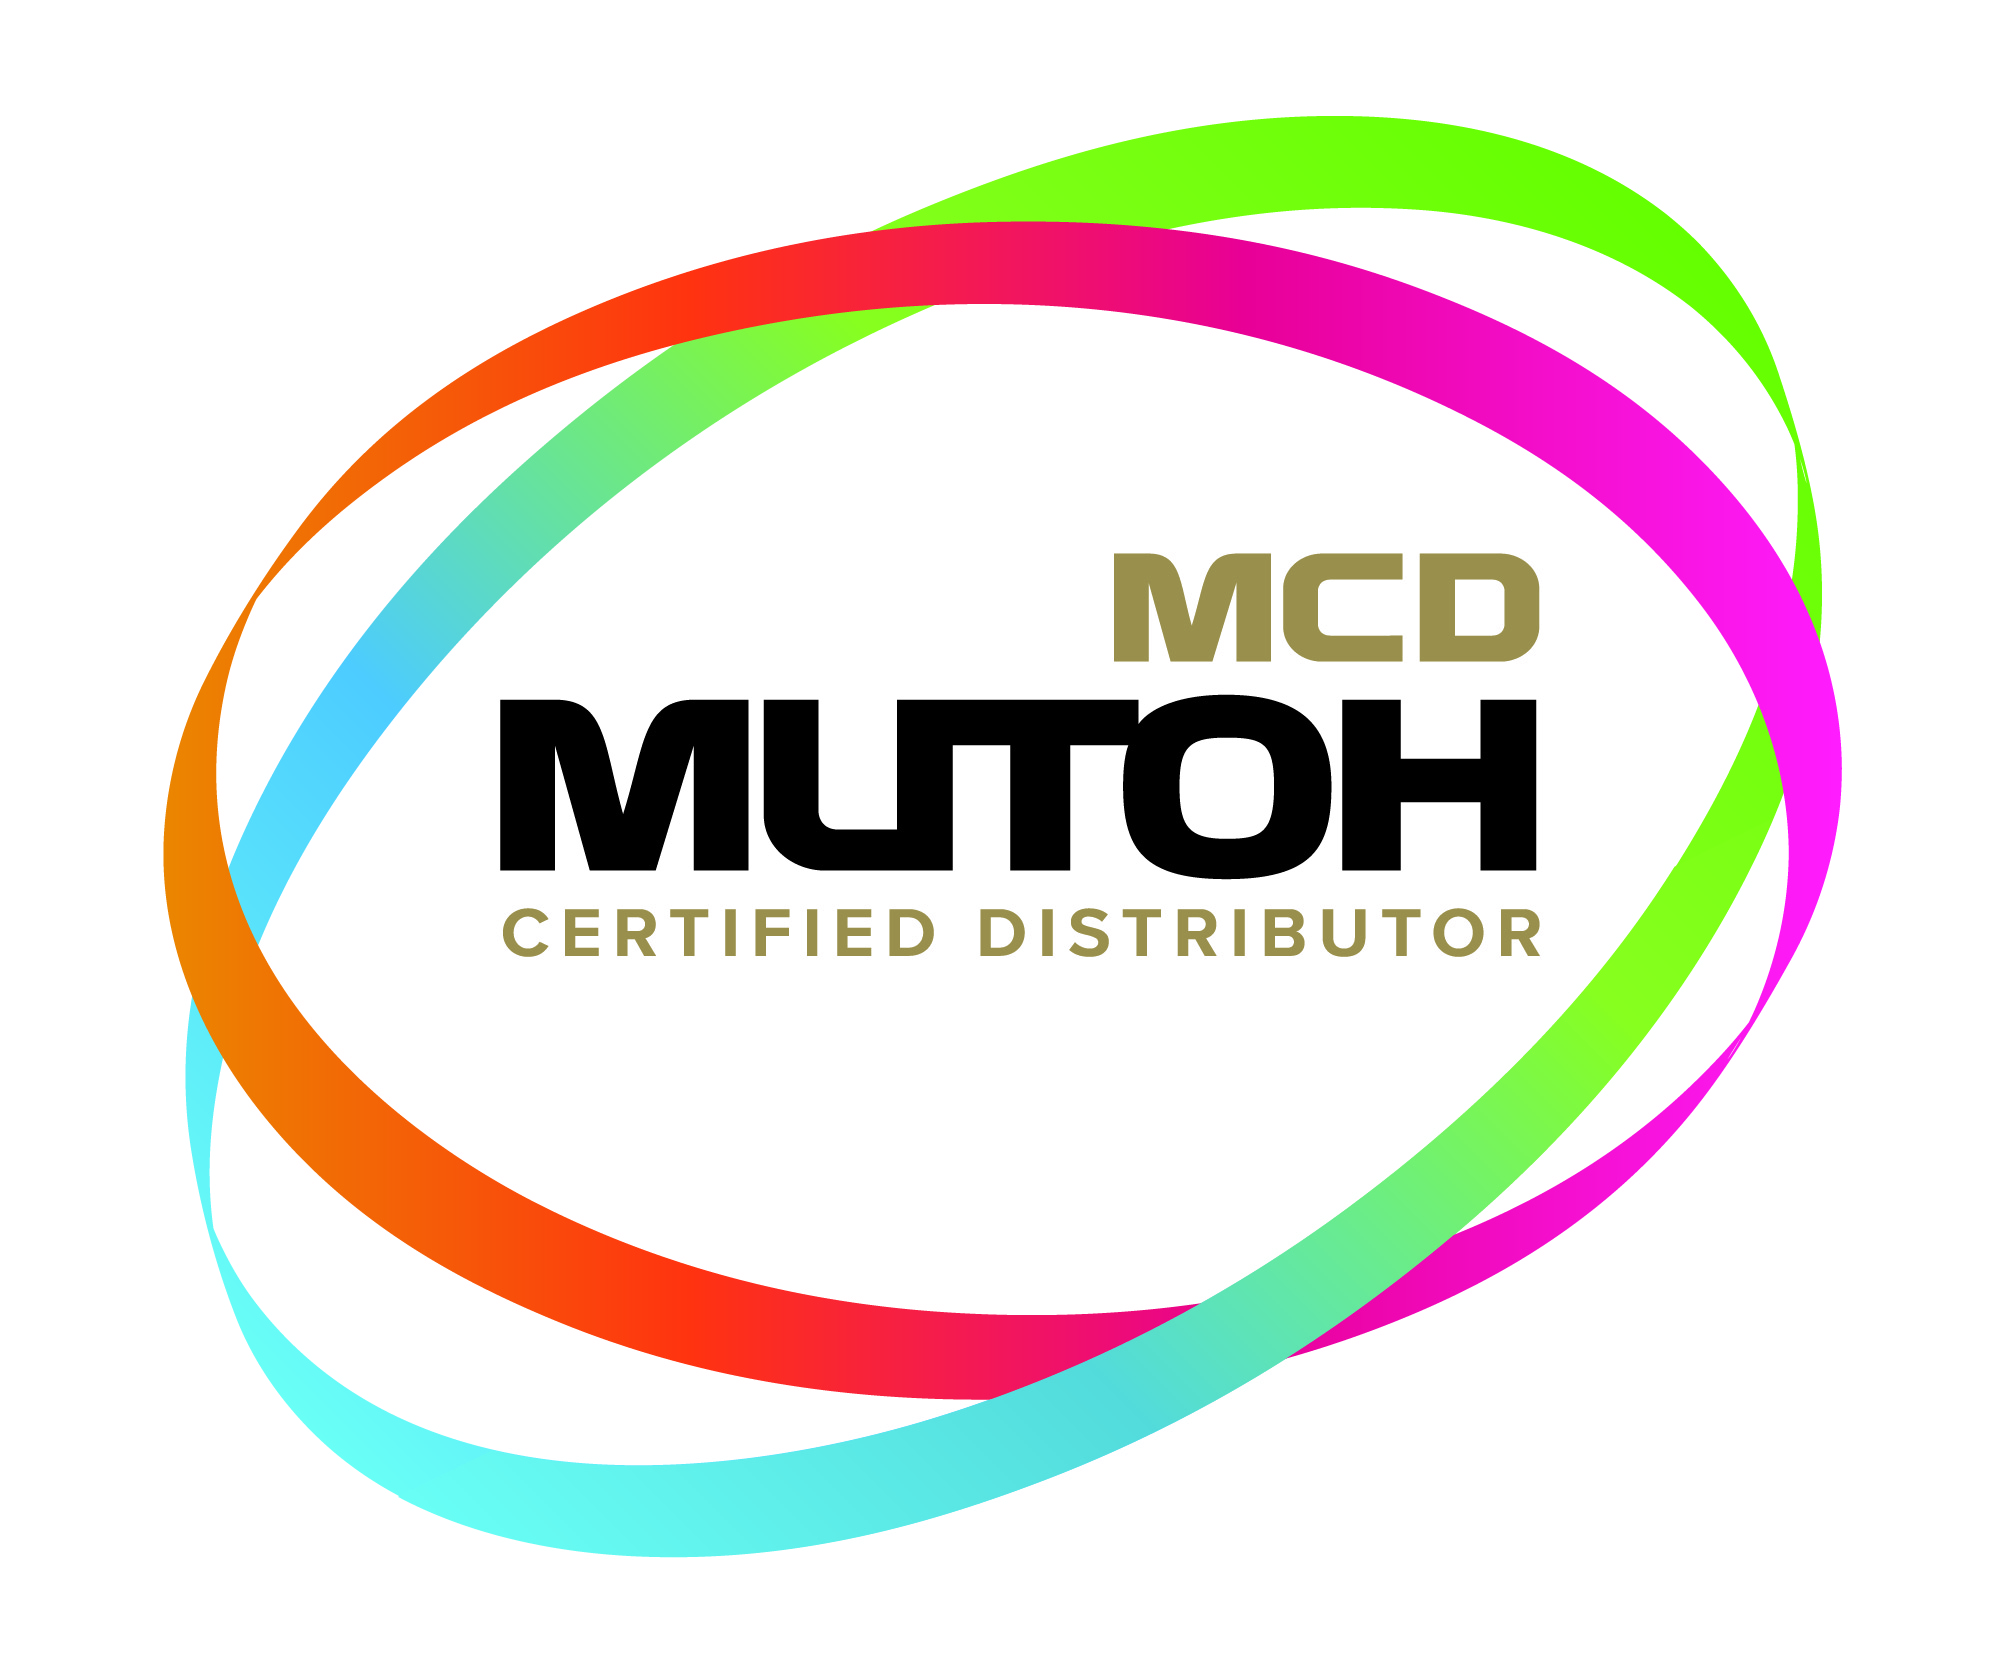 MCD-logo tech roll to roll